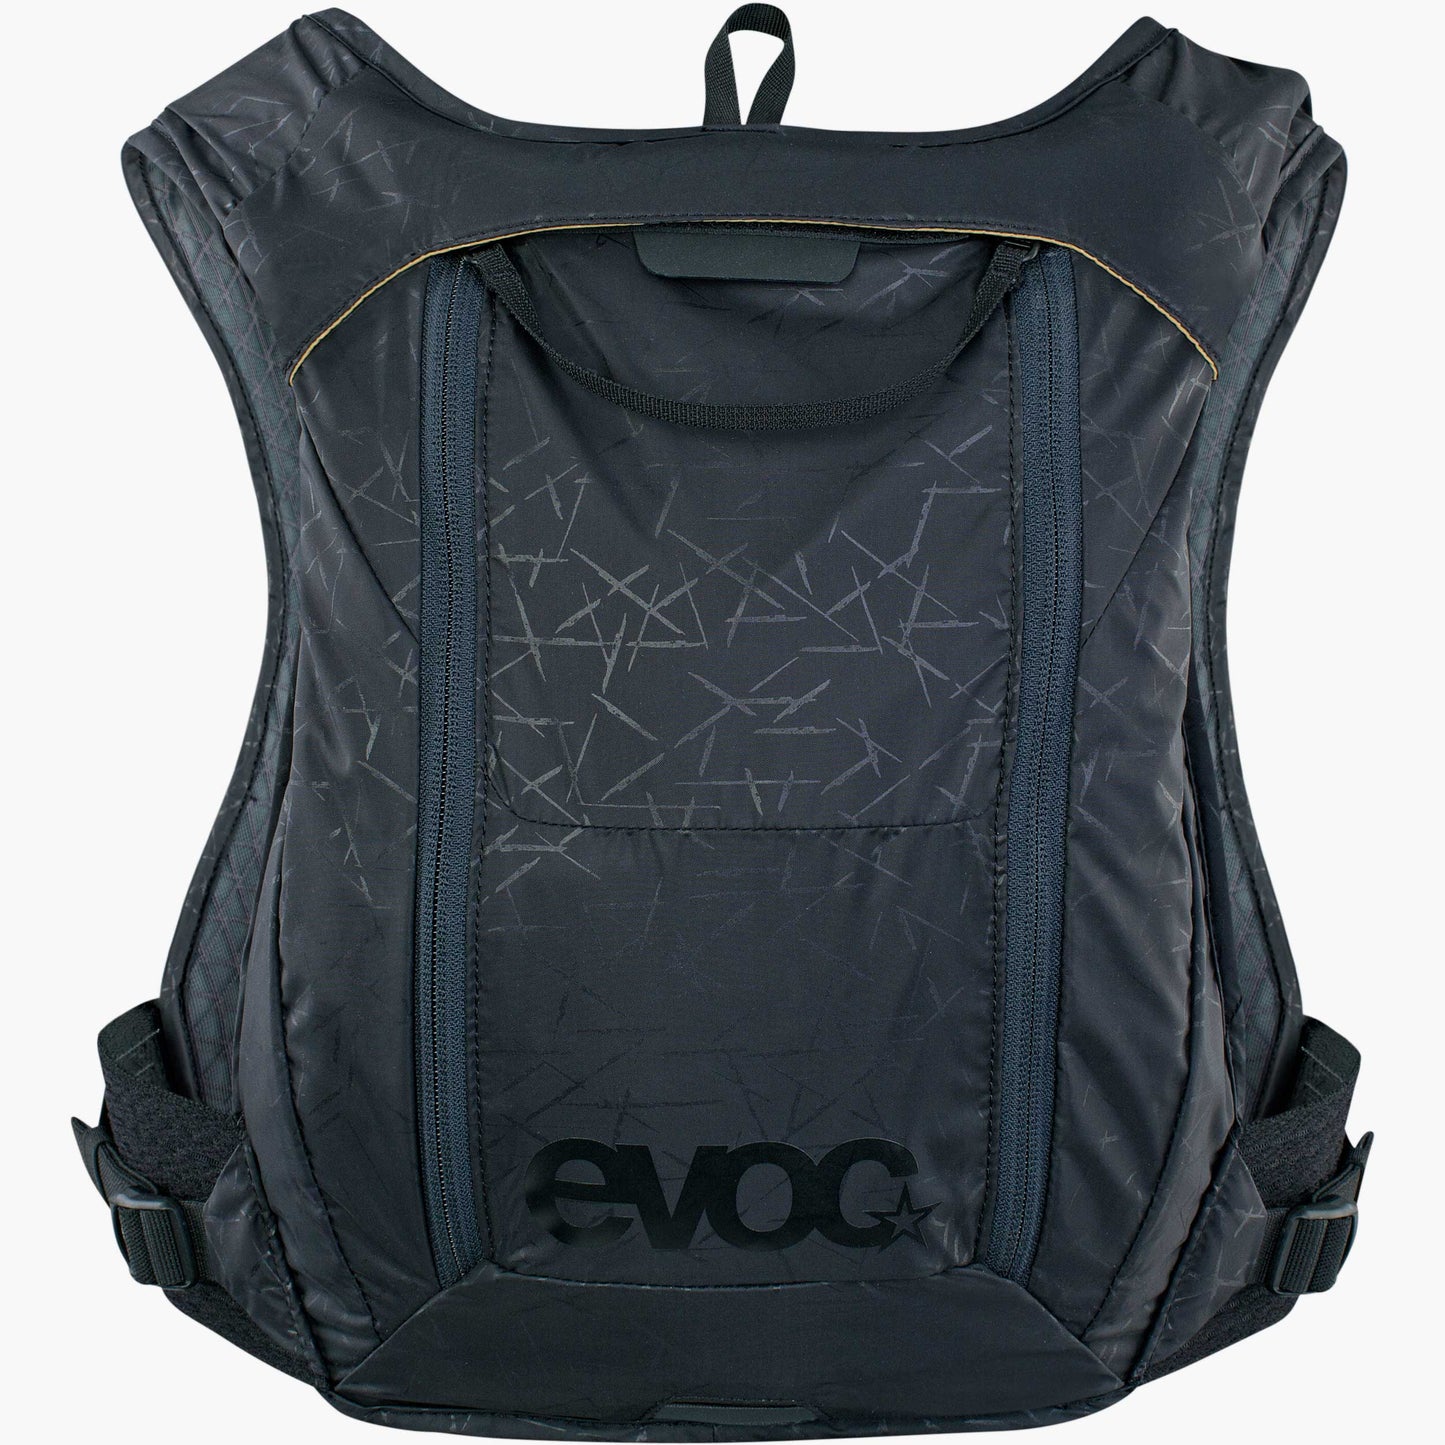 EVOC Hydro Pro 3 + 1.5L Bladder Hydration Bag - Volume: 3L, Bladder: 1.5L, Black